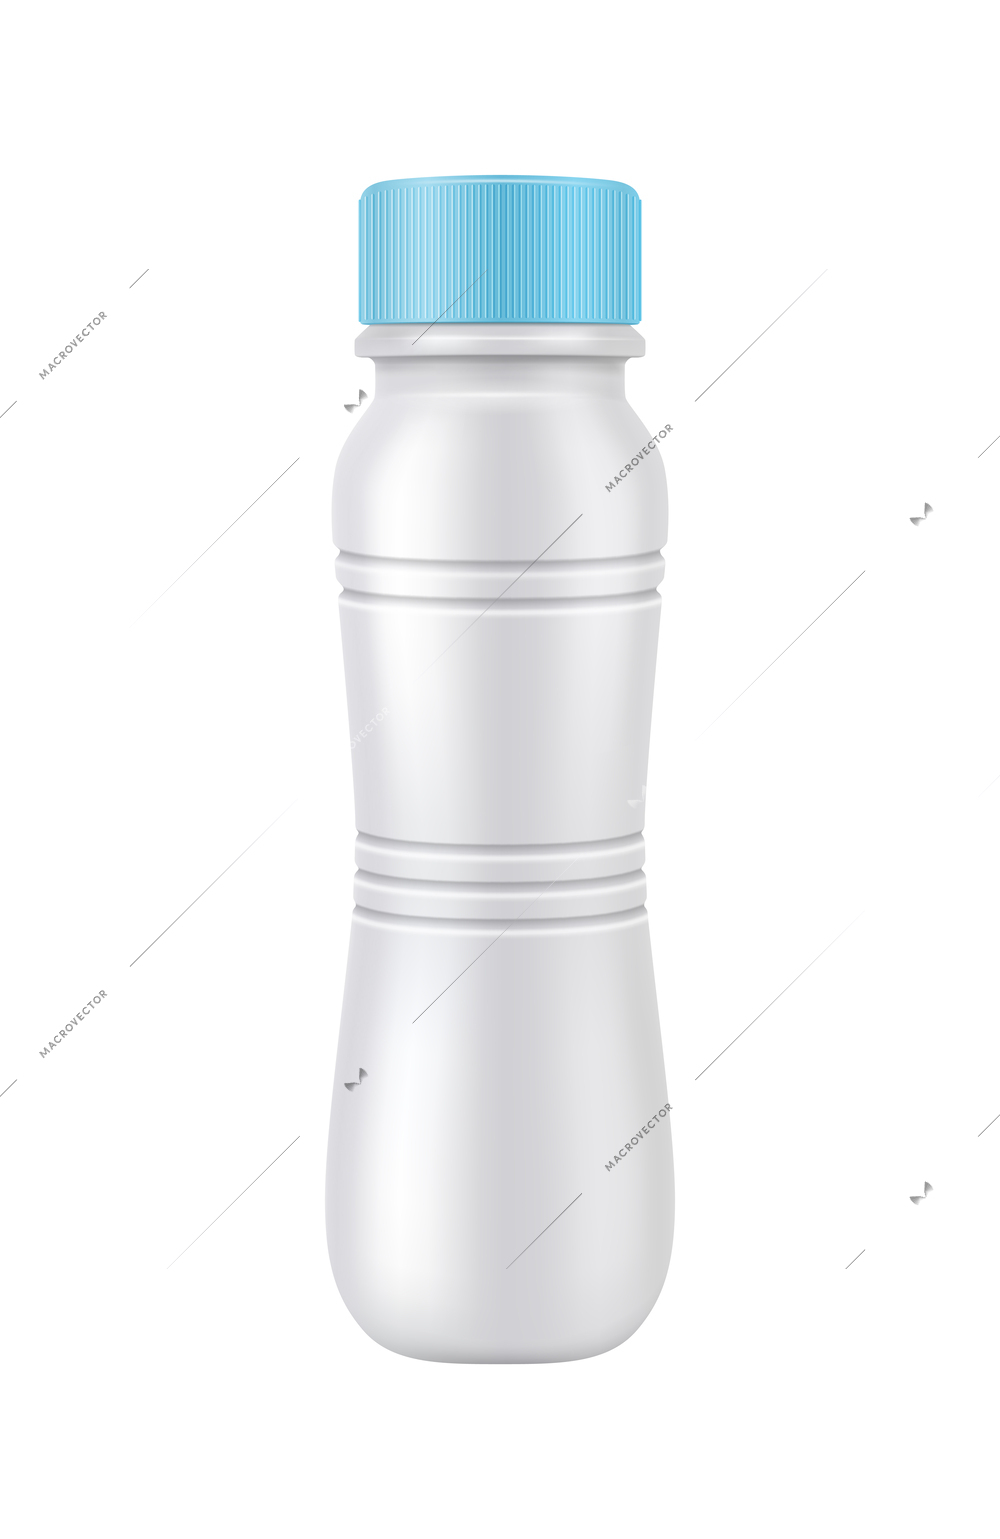 Realistic blank drinkable yoghurt bottle mockup with blue lid vector illustration